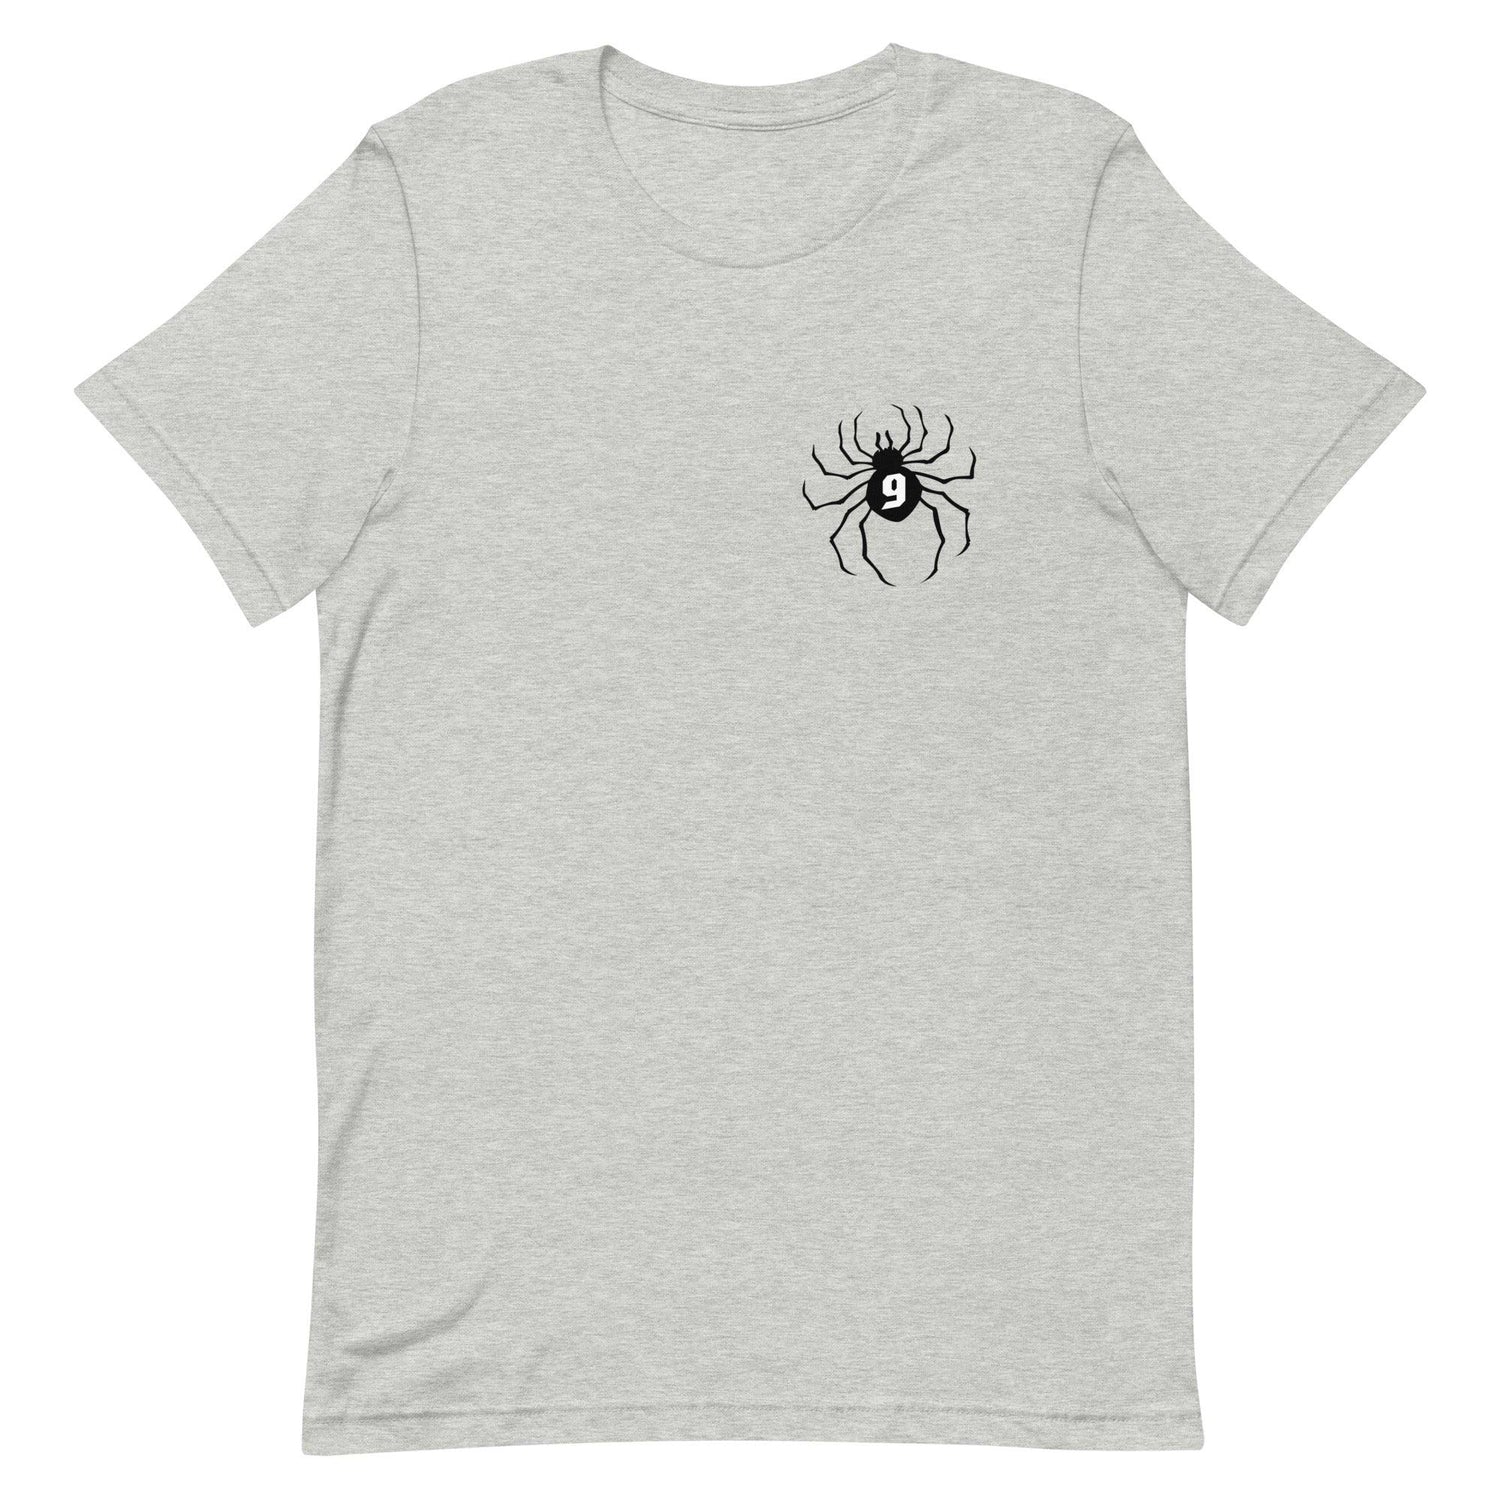 Marquis Dendy "Spider" t-shirt - Fan Arch